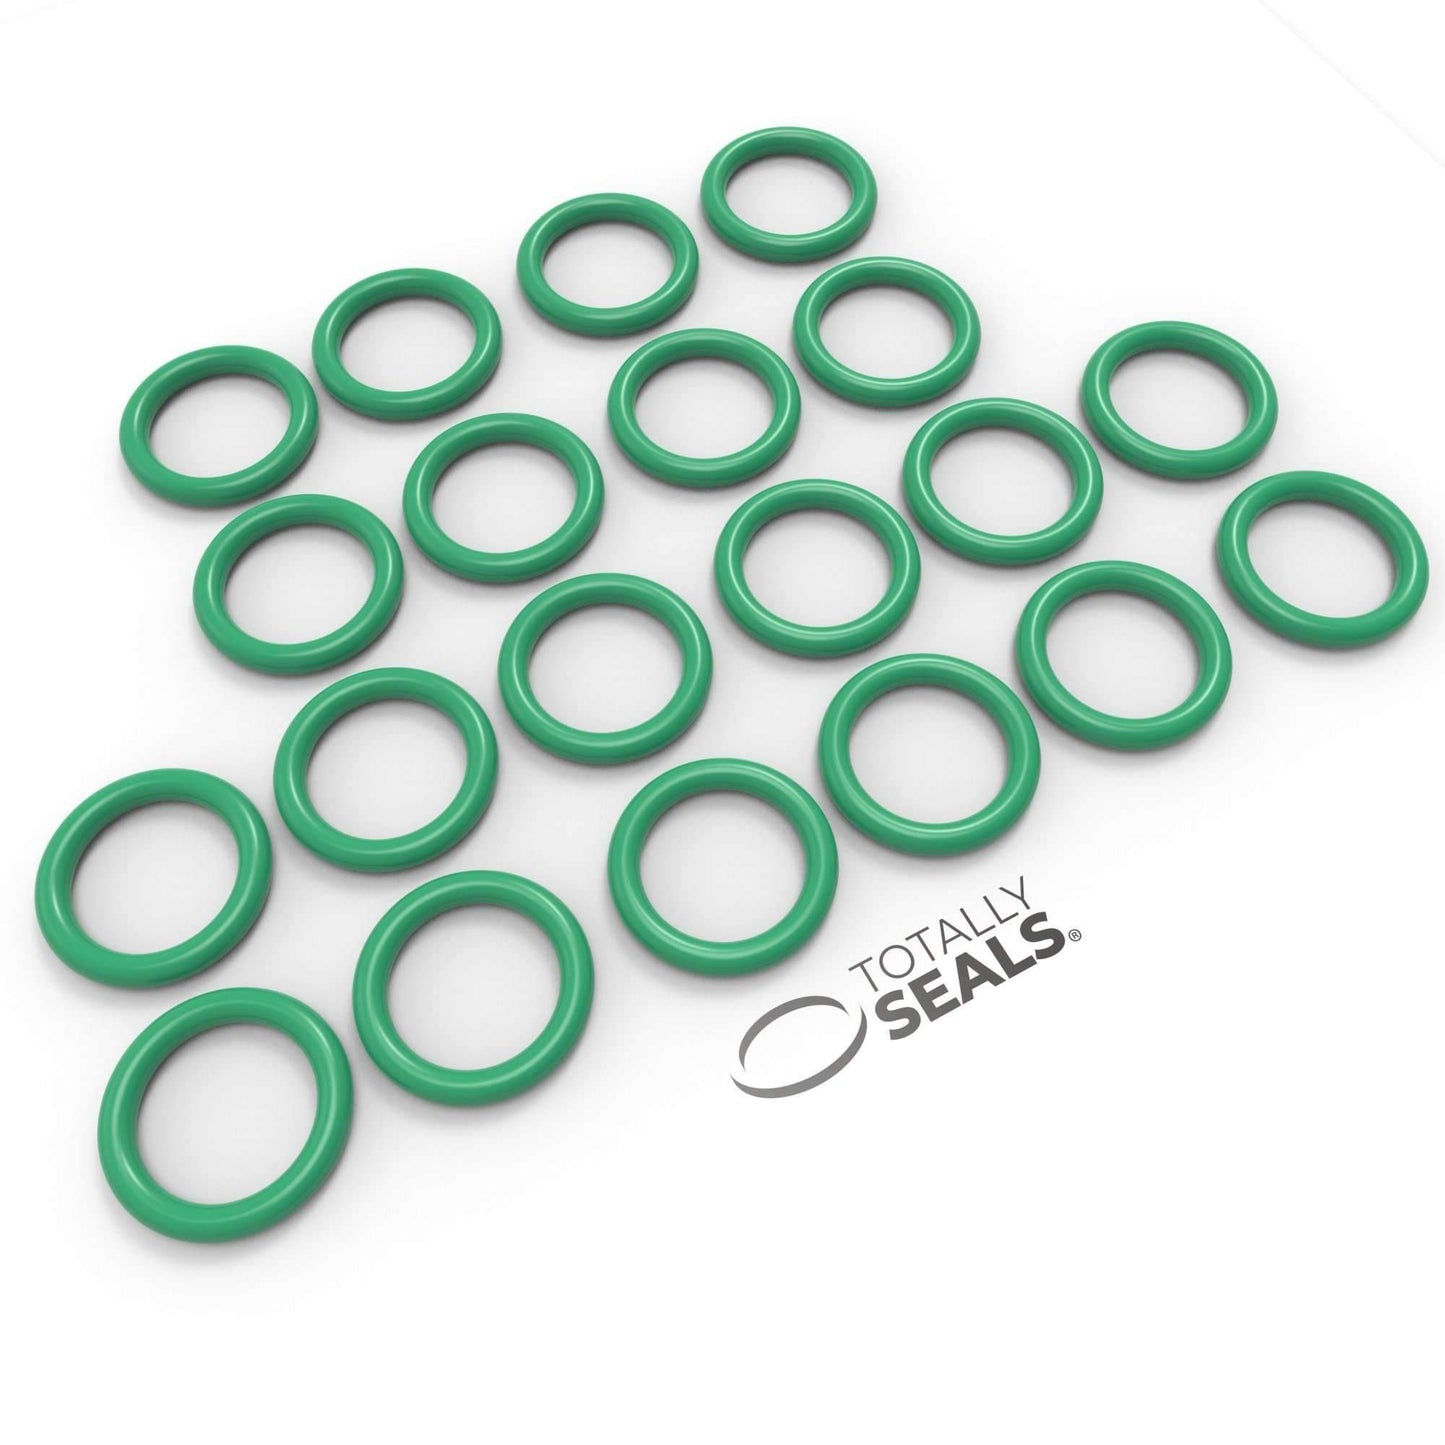 9mm x 2mm (13mm OD) FKM (Viton™) O-Rings - Totally Seals®